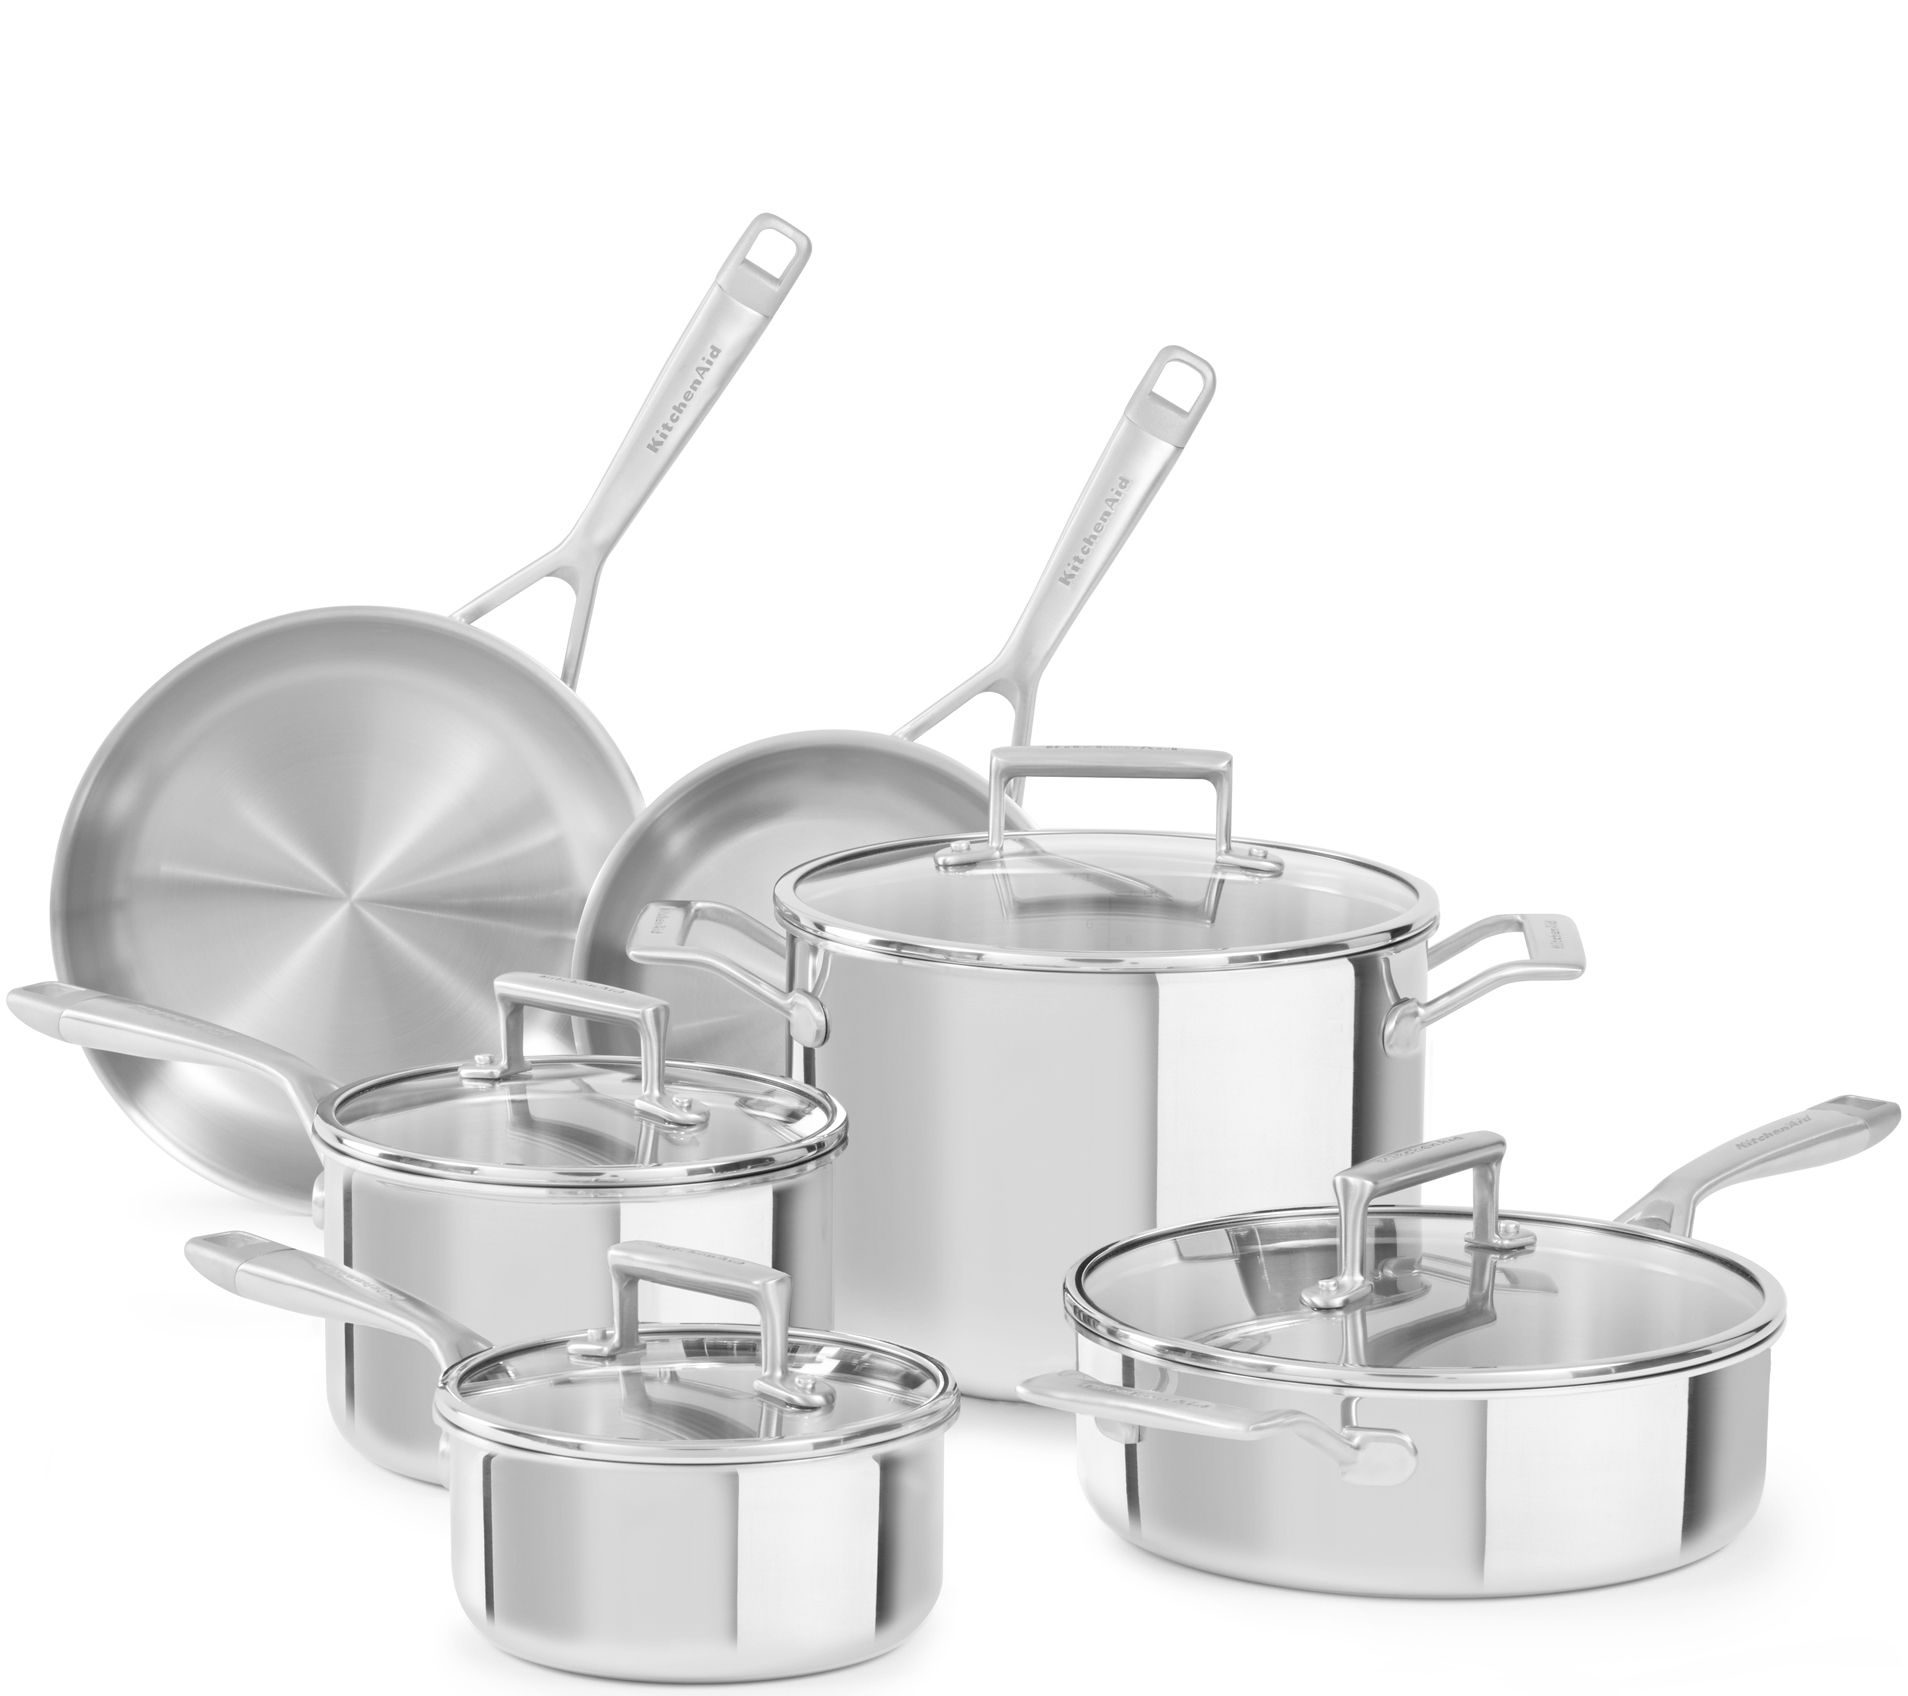 KitchenAid Cookware Sets